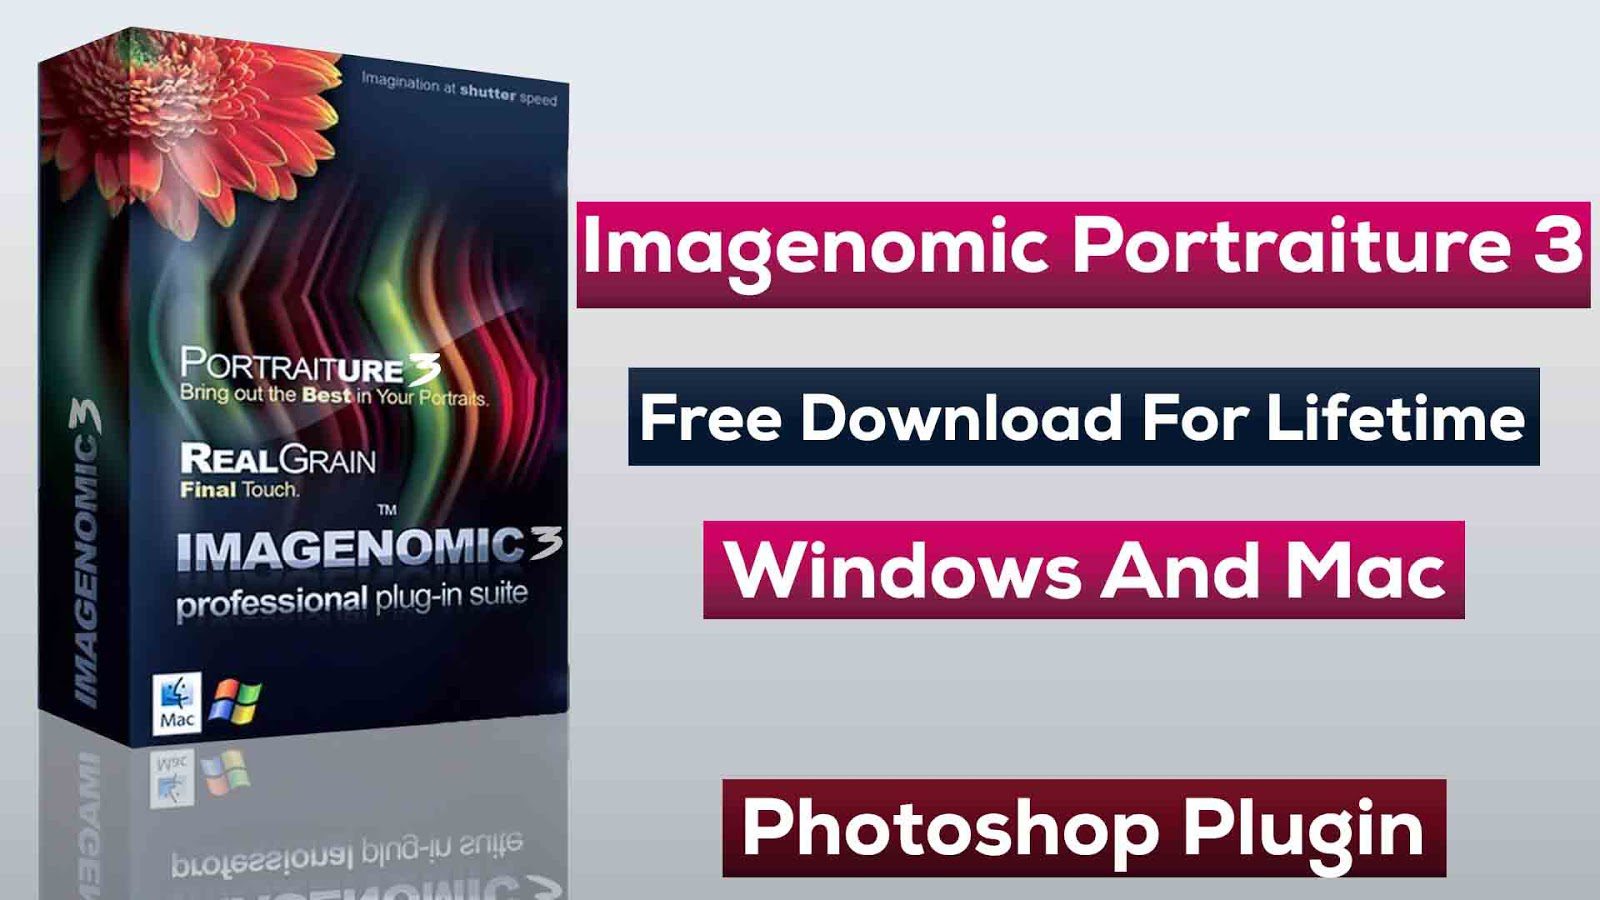 Imagenomic Portraiture Full Version For Windows Free Download